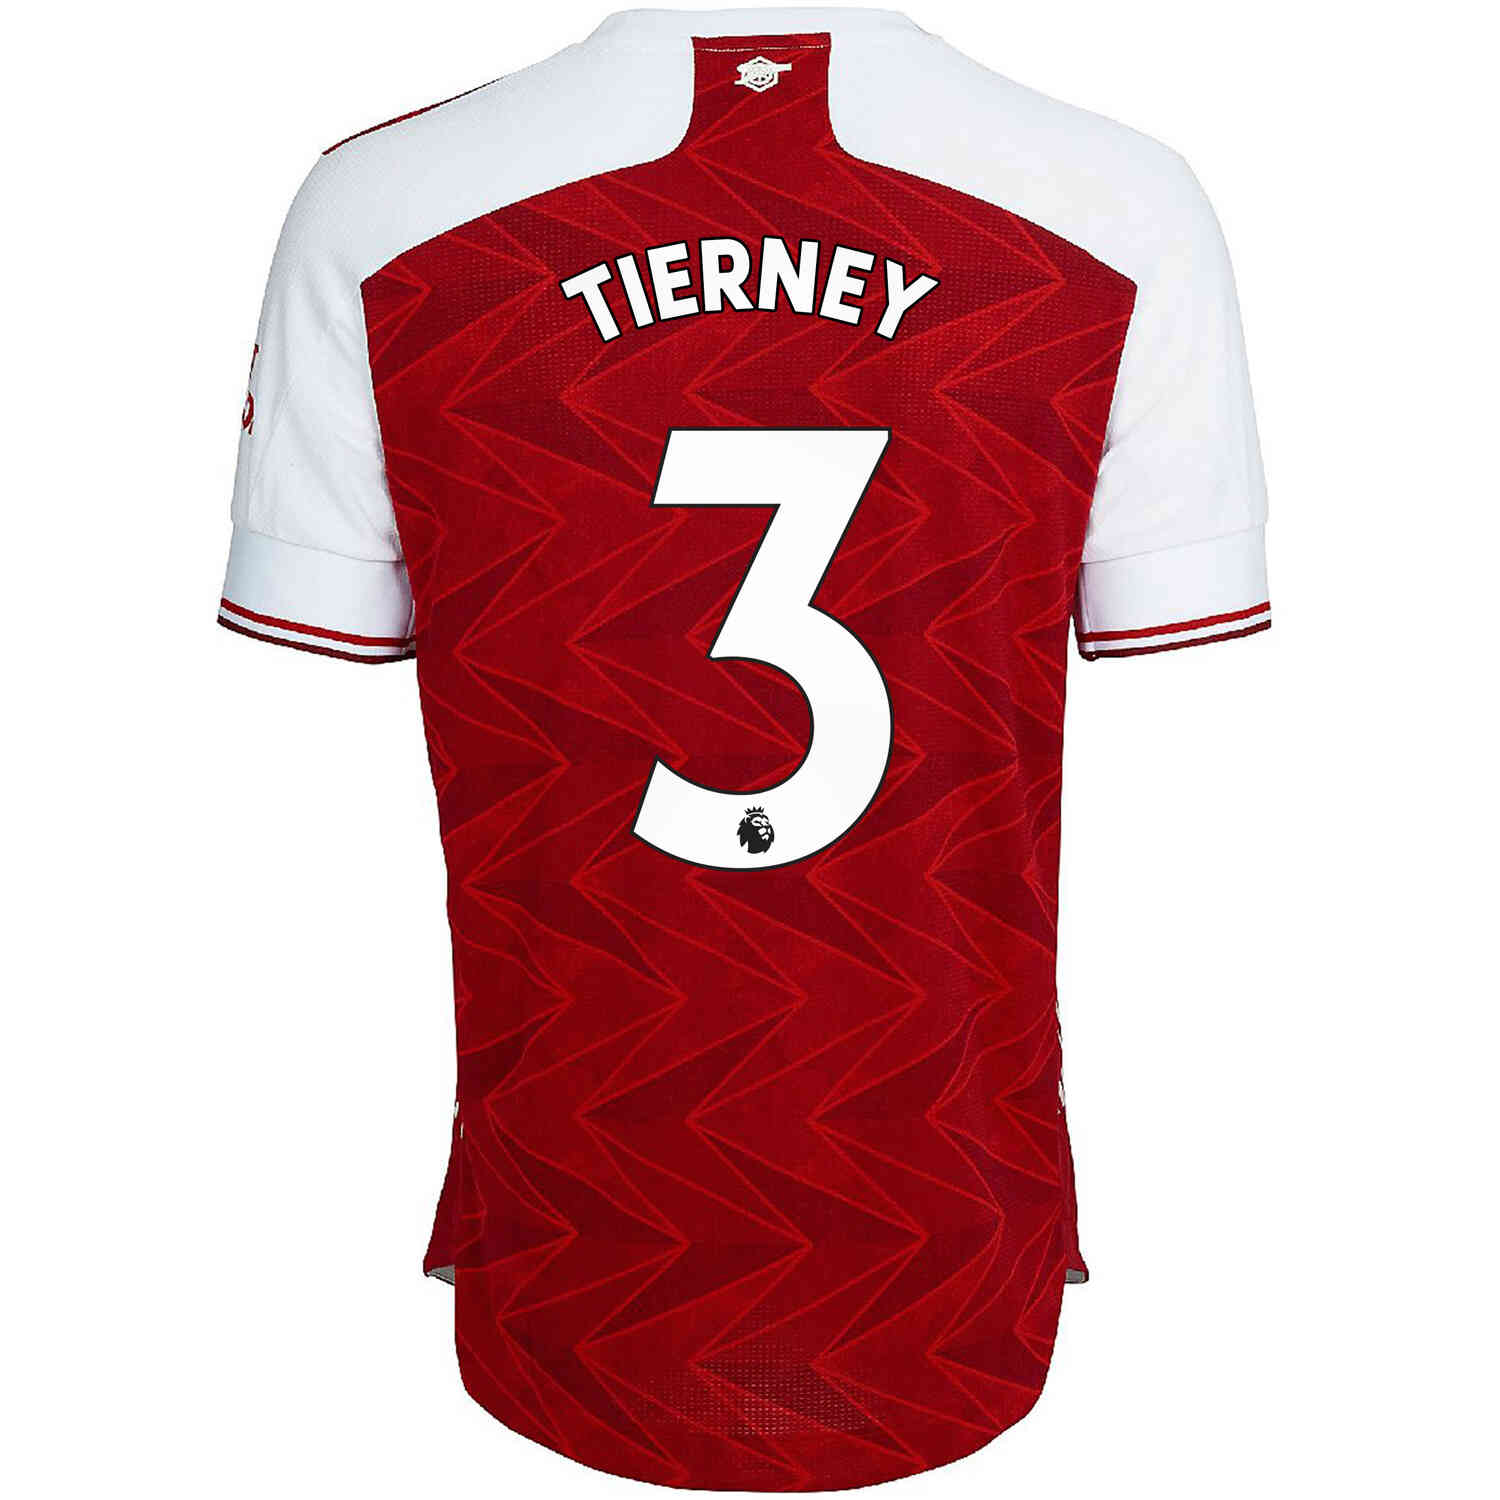 2020/21 adidas Kieran Tierney Arsenal 